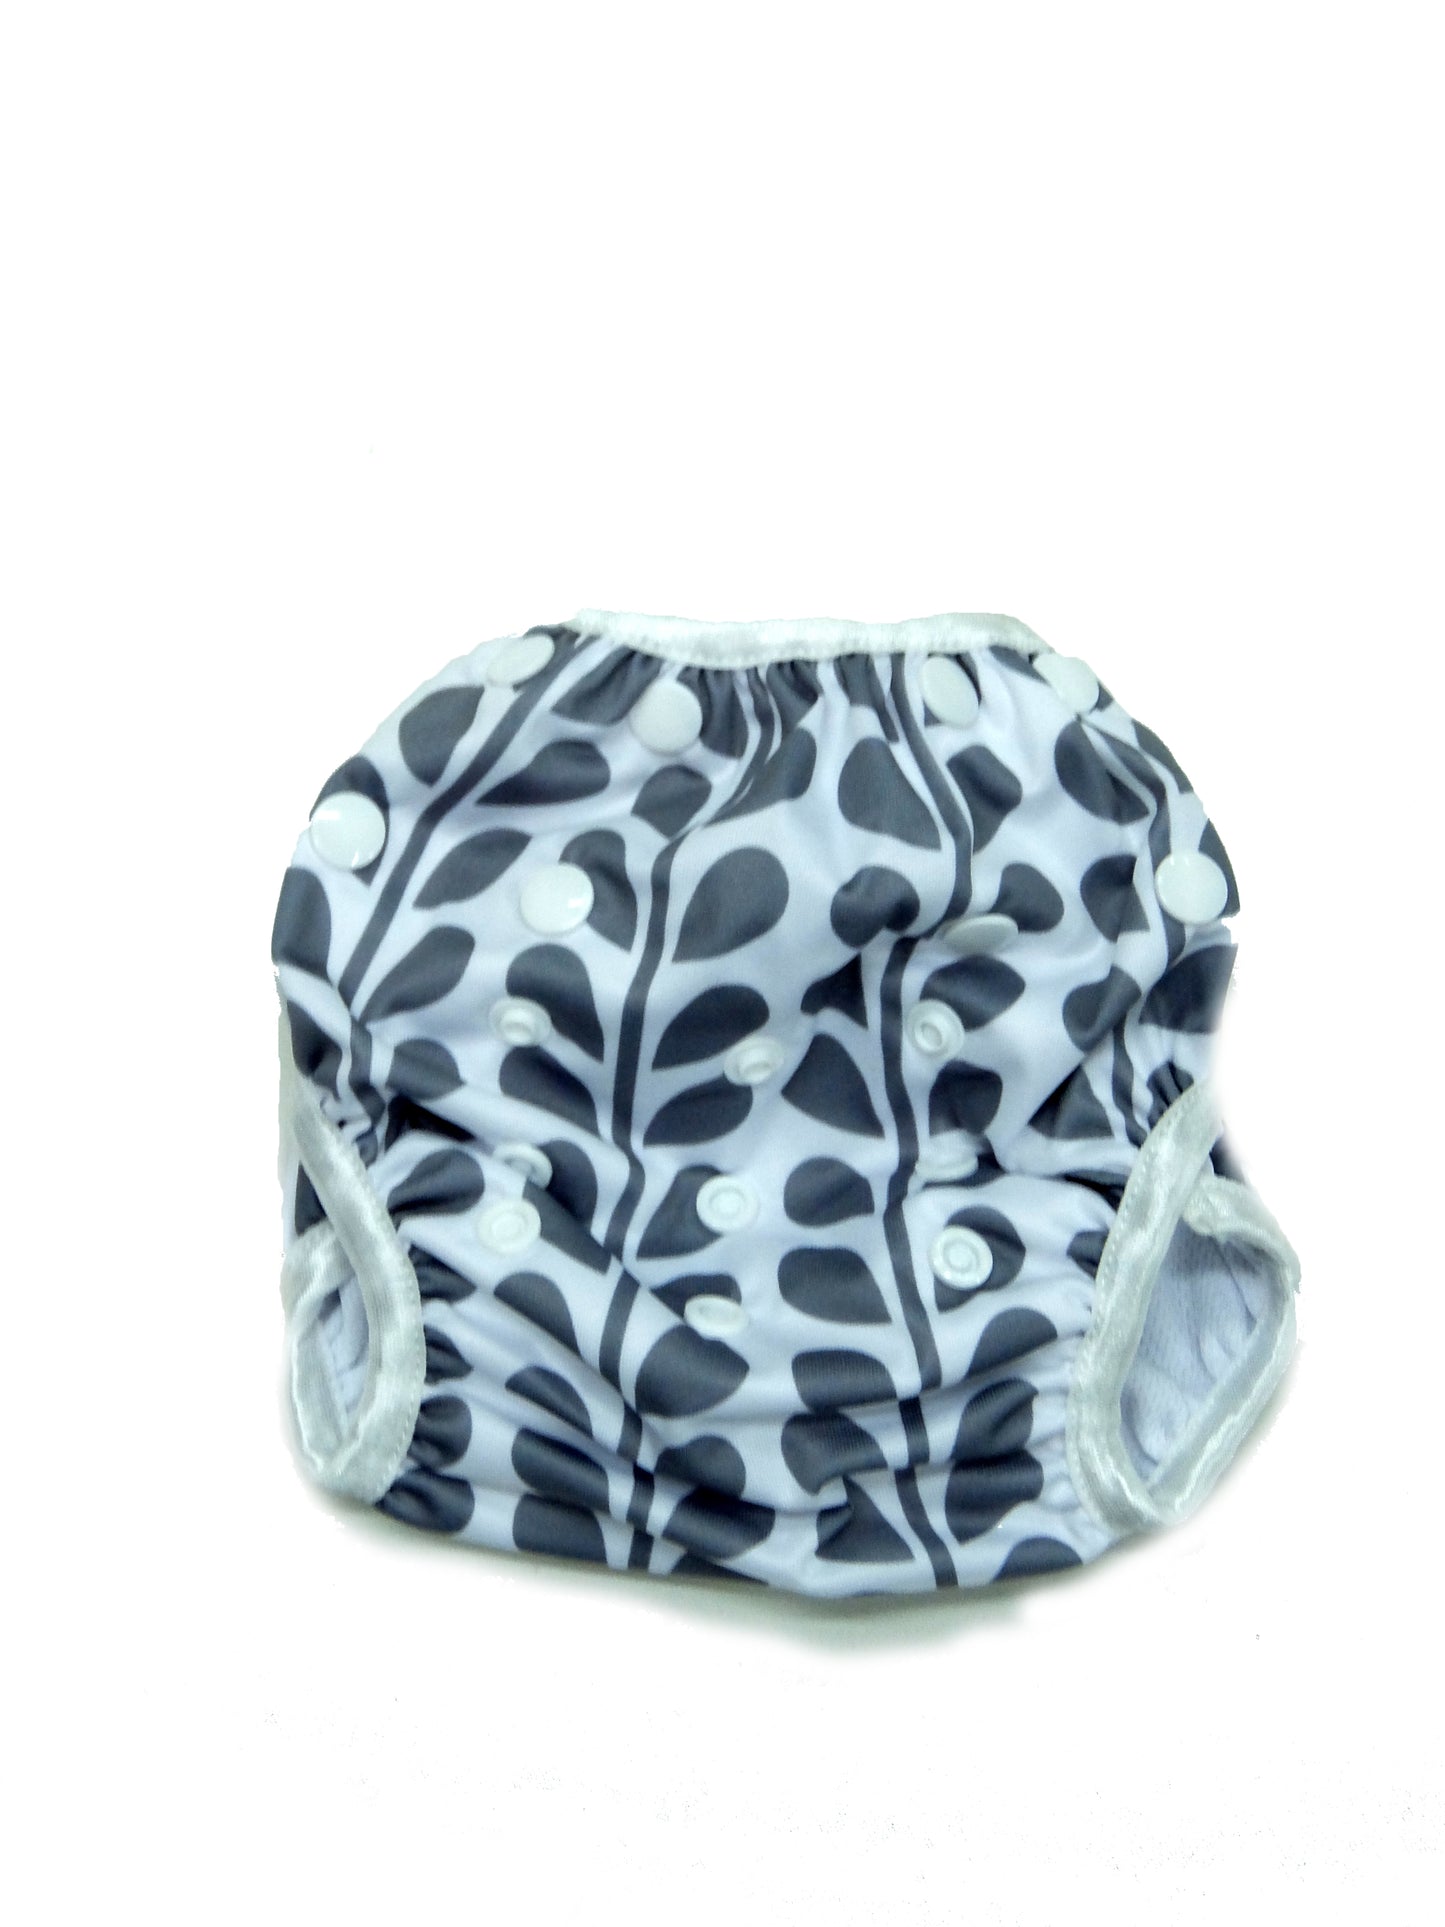 Next9 Swim Diapers Bloom Gray (assorted design)